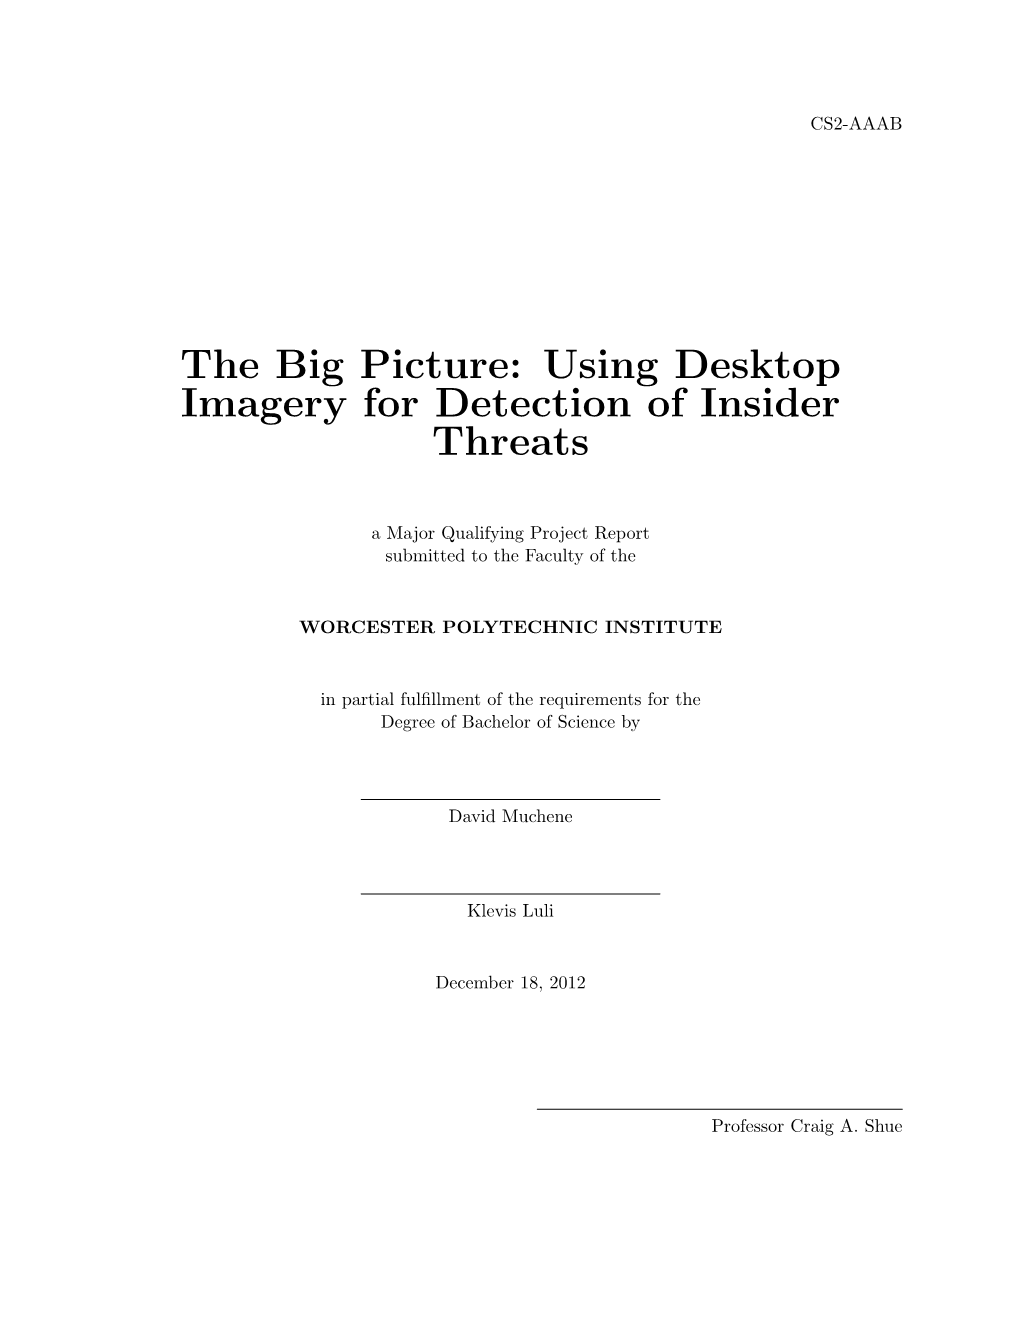 Using Desktop Imagery for Detection of Insider Threats